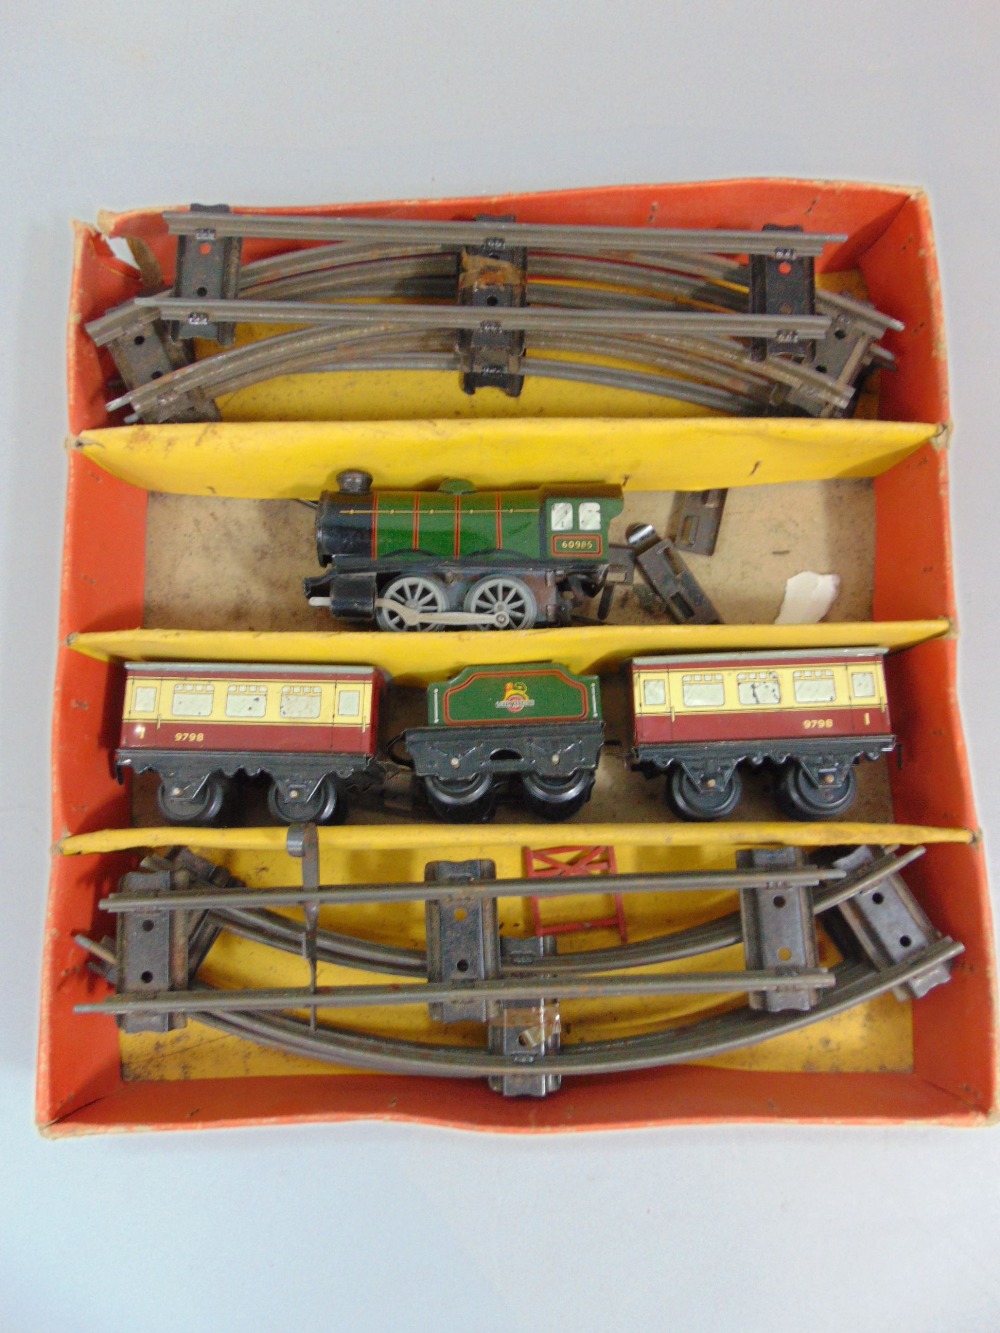 Boxed Hornby train, passenger set no 21, O gauge, including clockwork locomotive, tender and two - Image 2 of 3